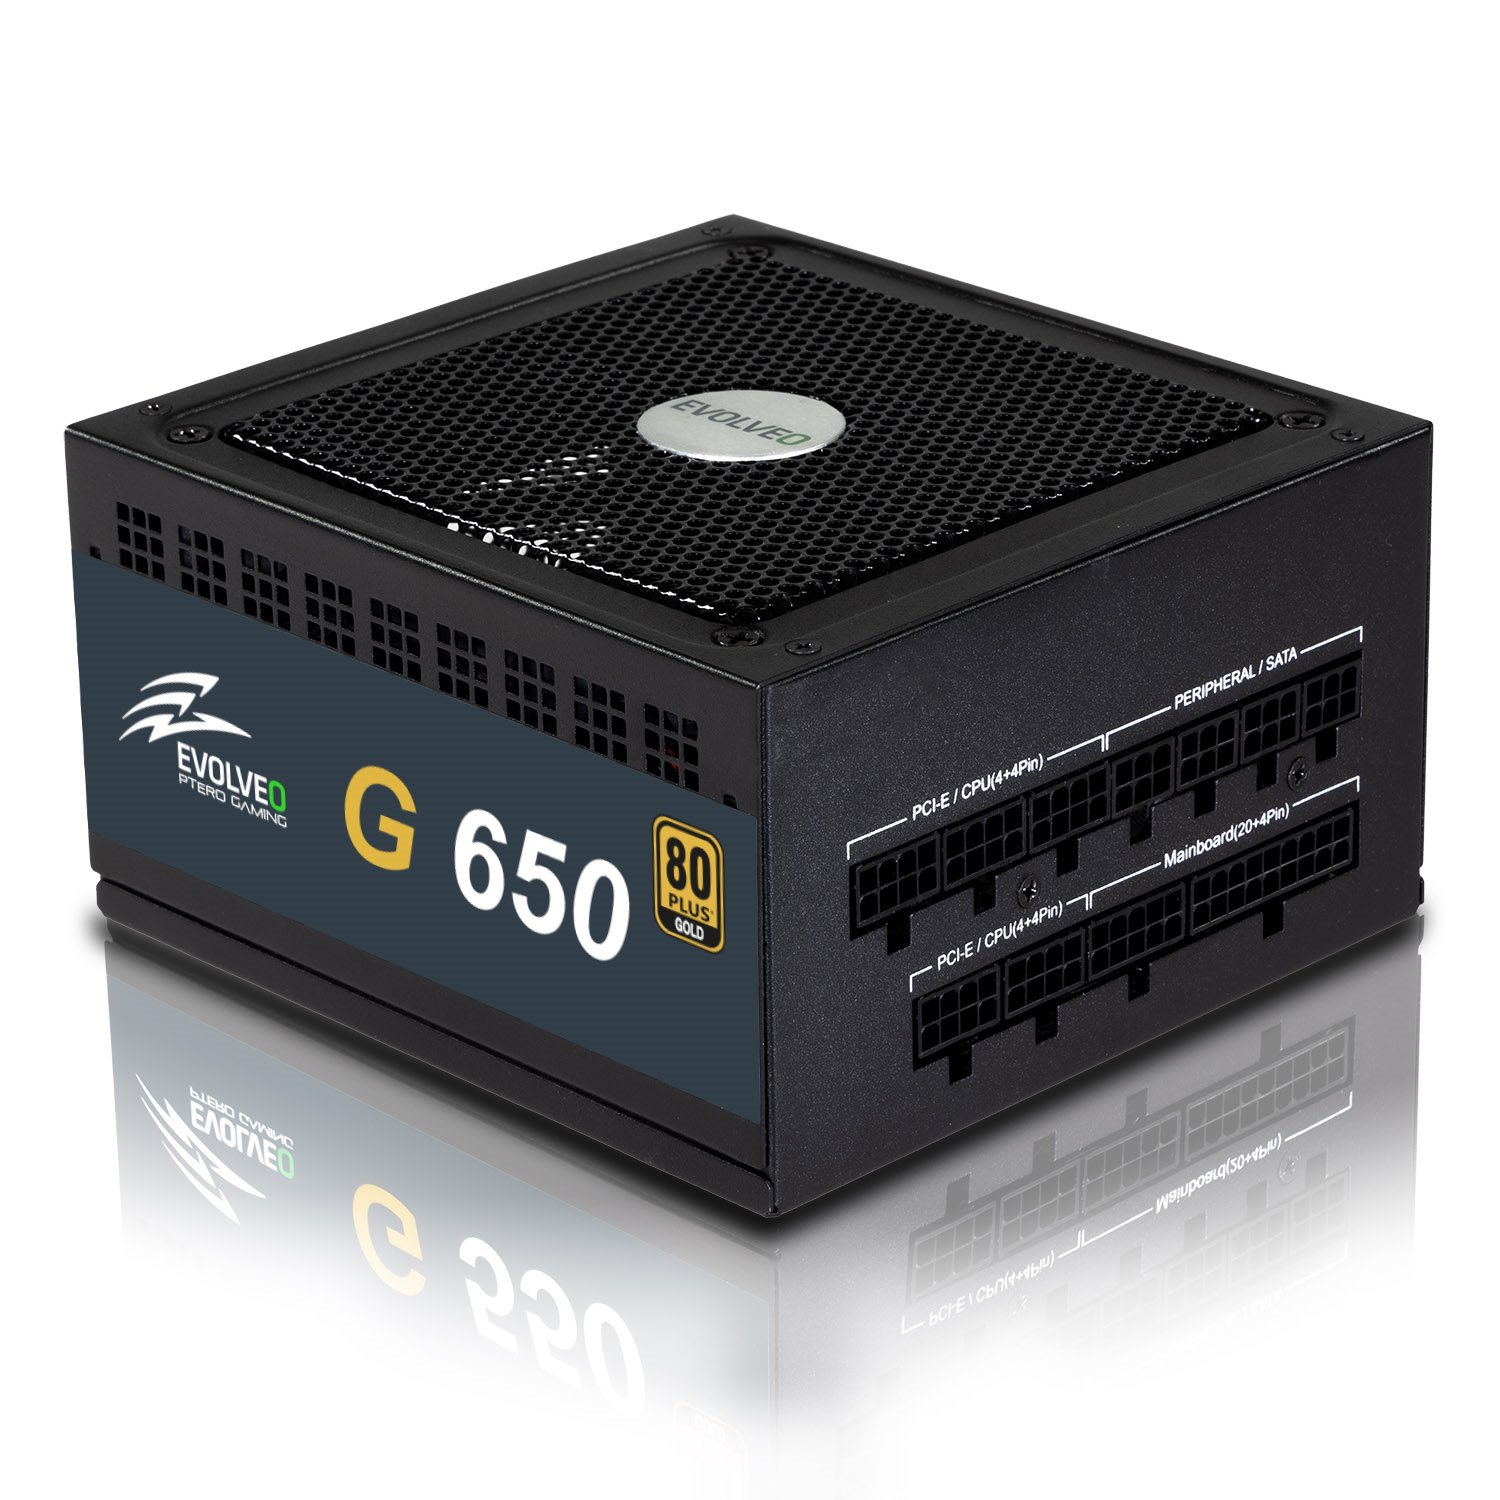 Levně EVOLVEO G650 zdroj 650W, 80+ GOLD, 90% účinnost, aPFC, 140mm ventilátor, retail